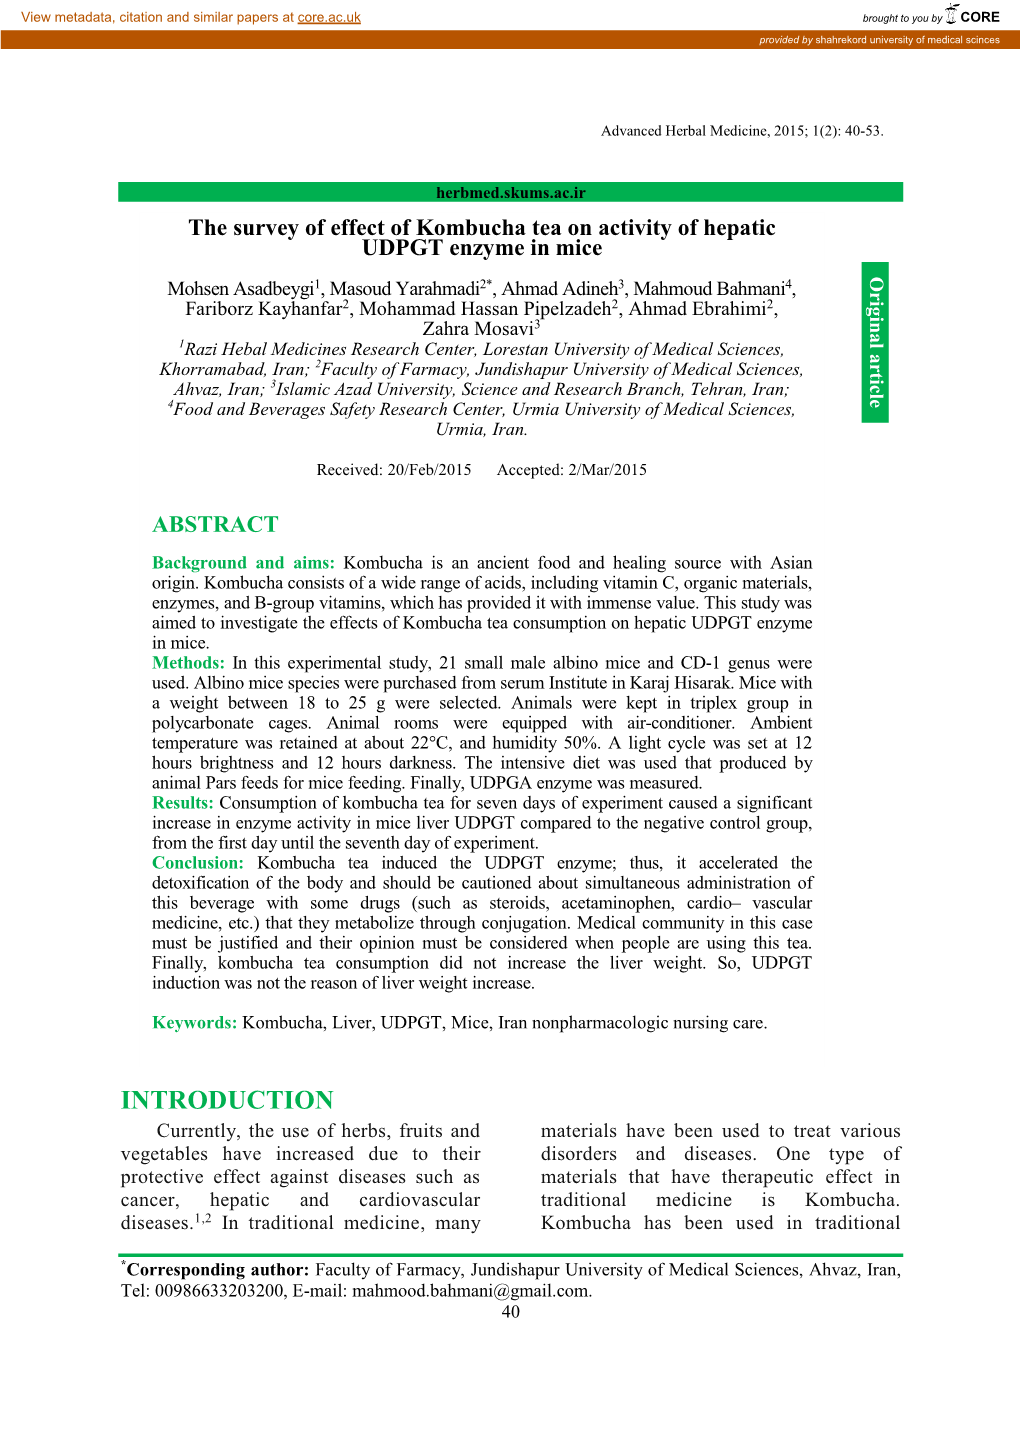 The Survey of Effect of Kombucha Tea on Activity of Hepatic UDPGT